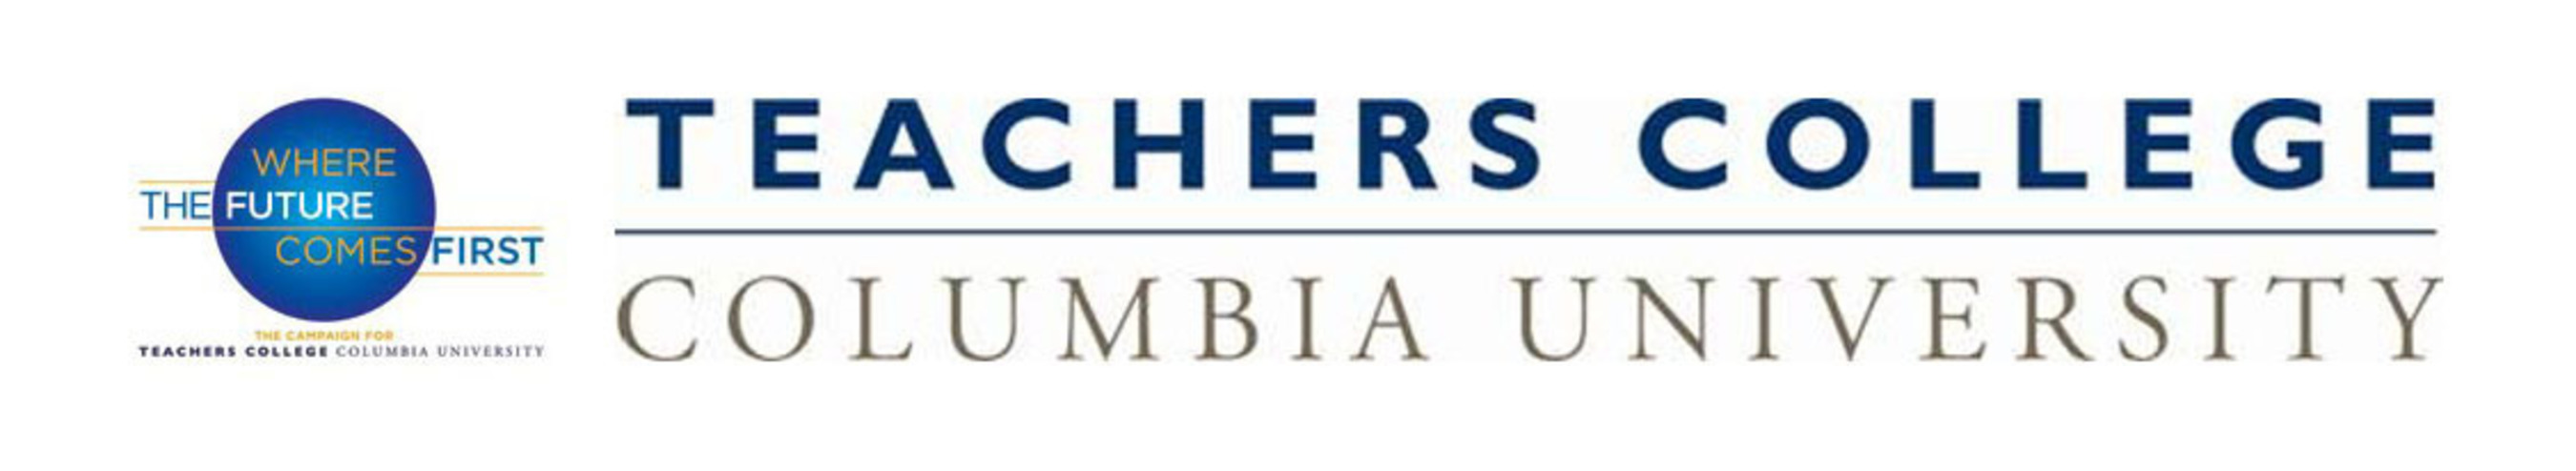 Teachers College Campaign logo.